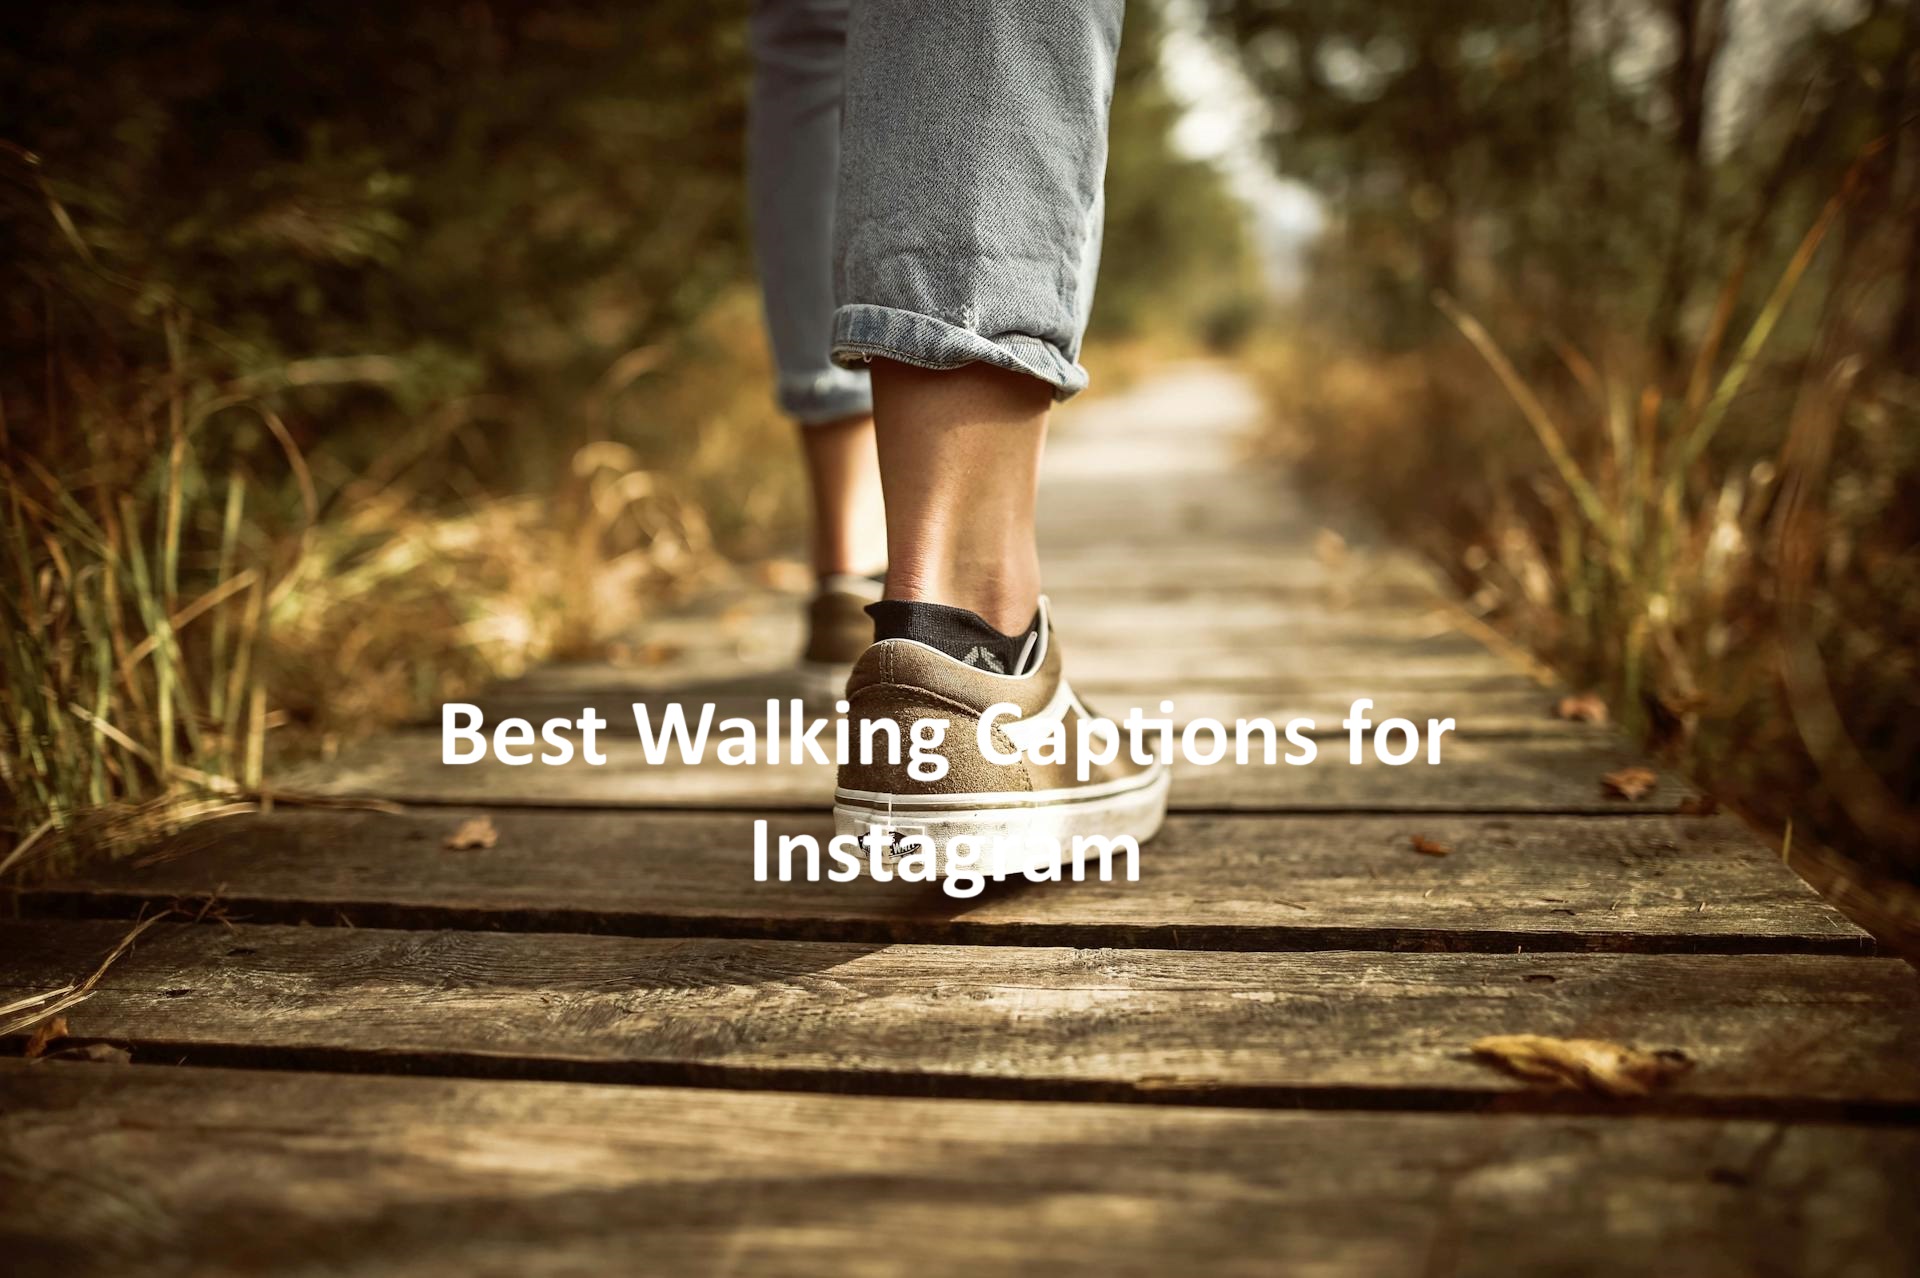 Walking Captions for Instagram